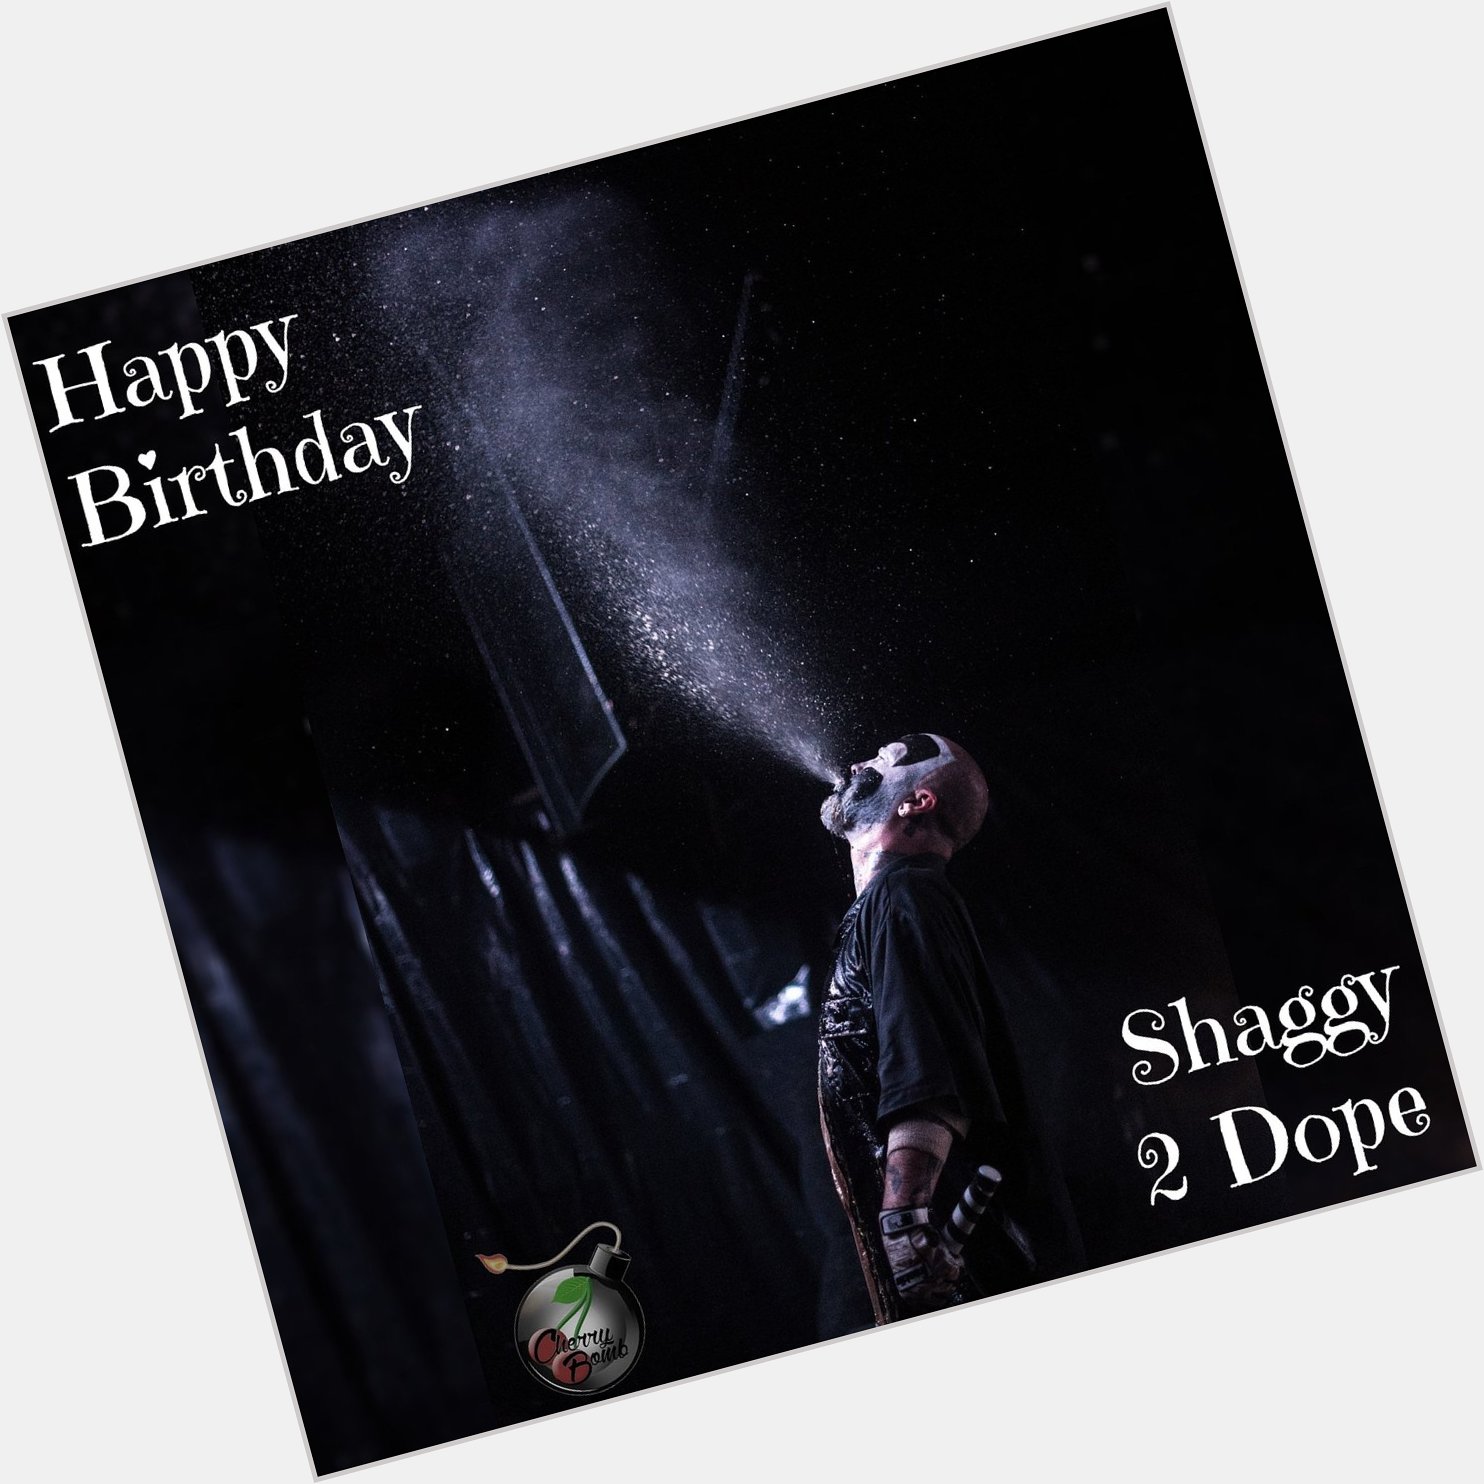 Happy Birthday Shaggy 2 Dope!   